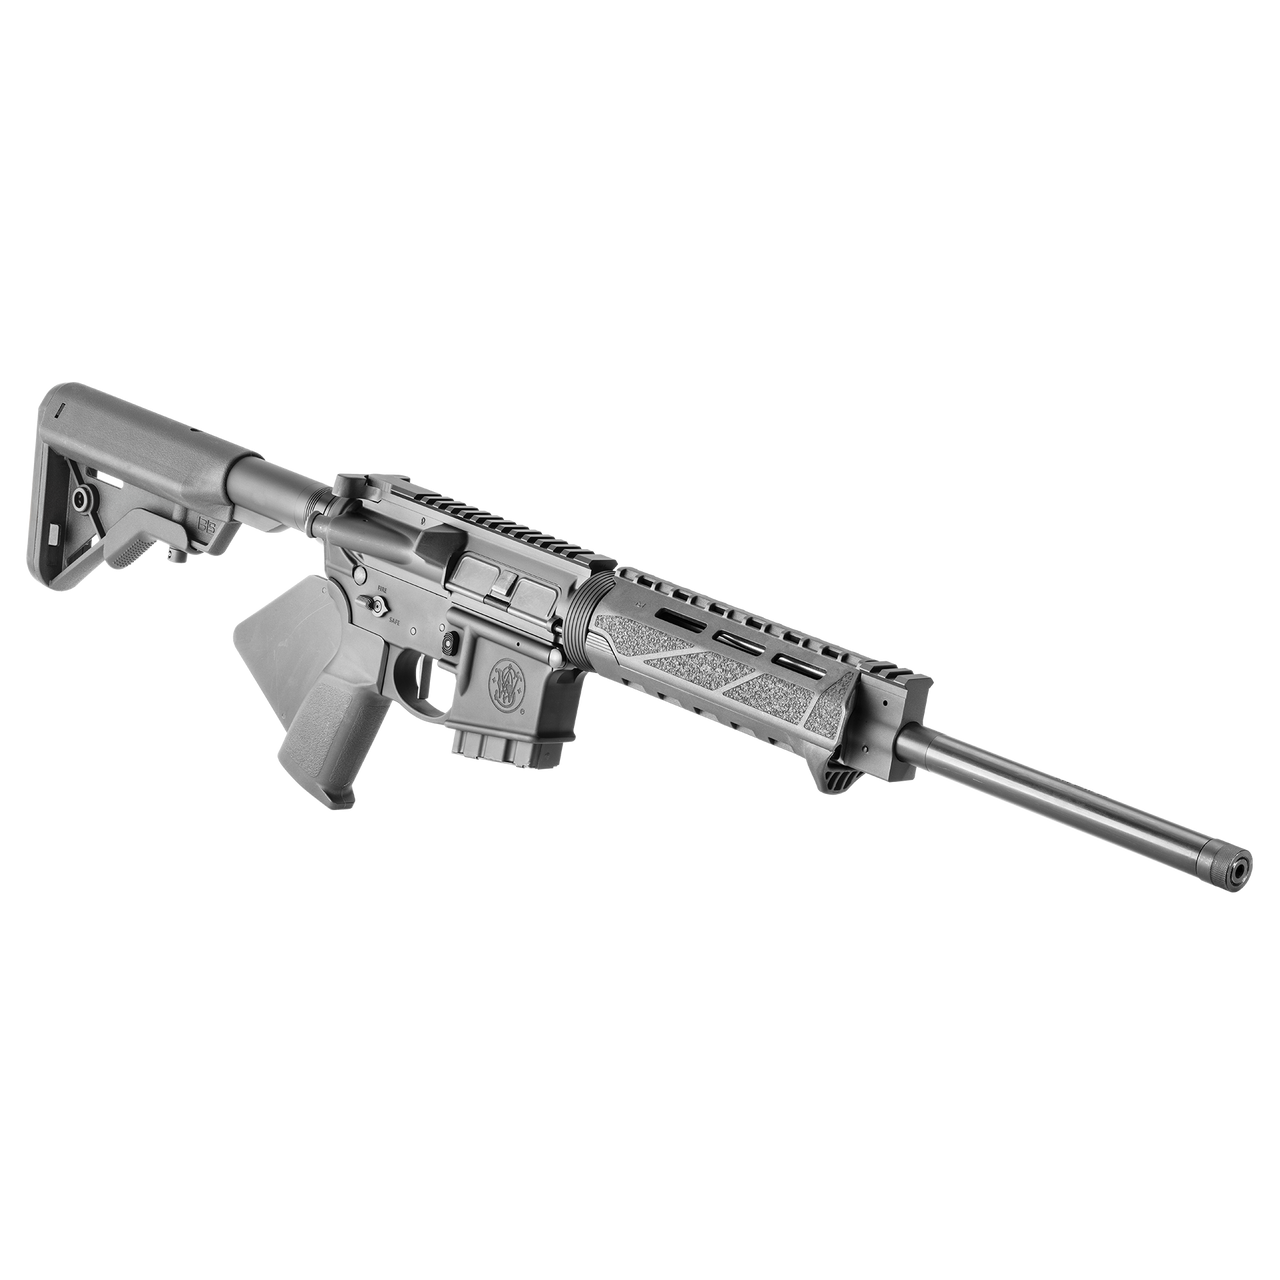 Buy Smith & Wesson Volunteer XV Optics Ready Compliant Long Gun Online